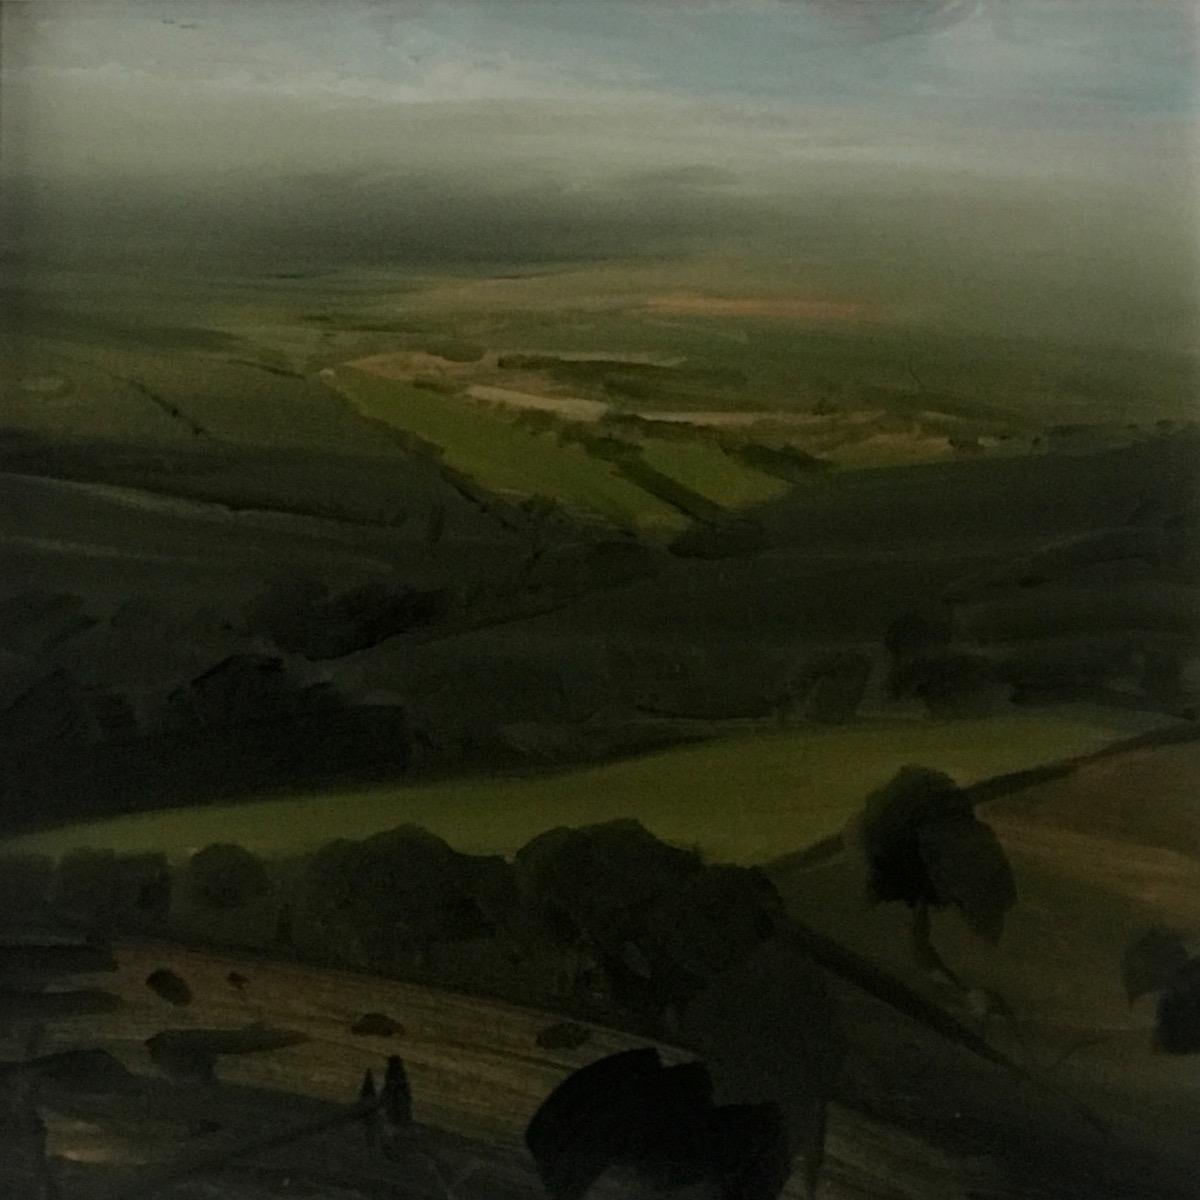 James Naughton Landscape Painting - Hills In Mist, Original painting, Landscape, Nature, Birds view, Lake, Hills 